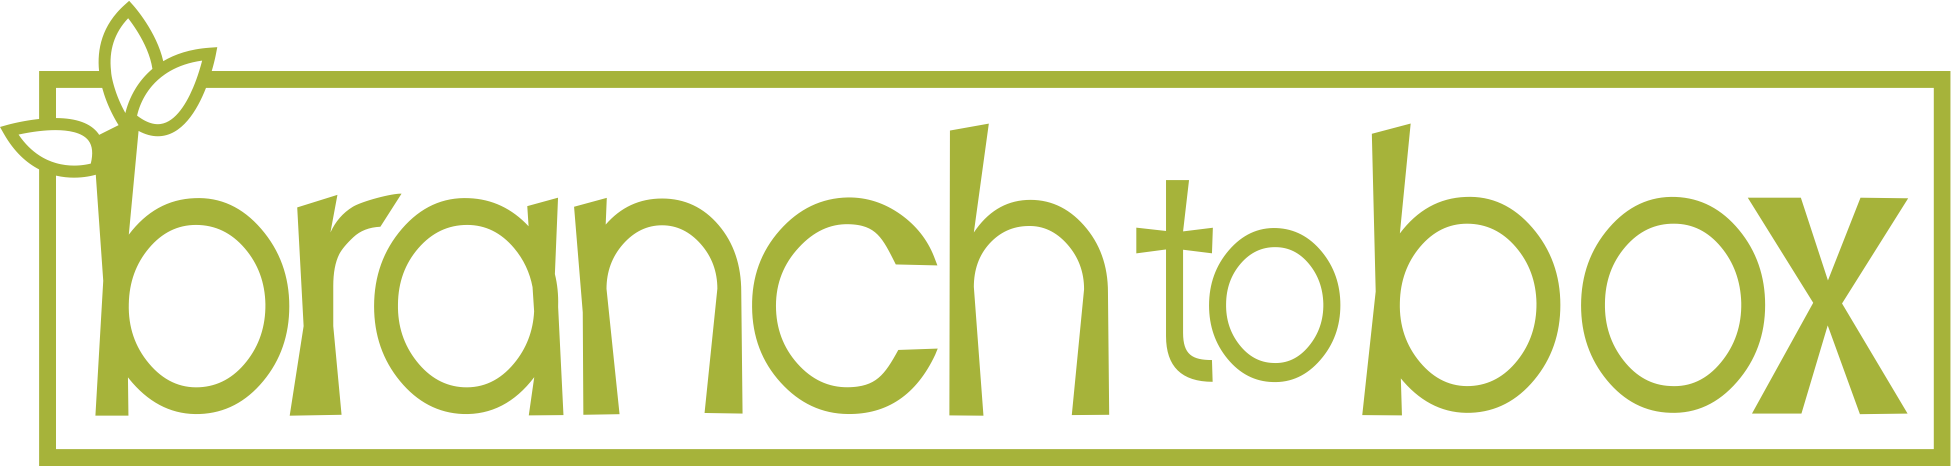 TechCrunch Logo - LogoDix